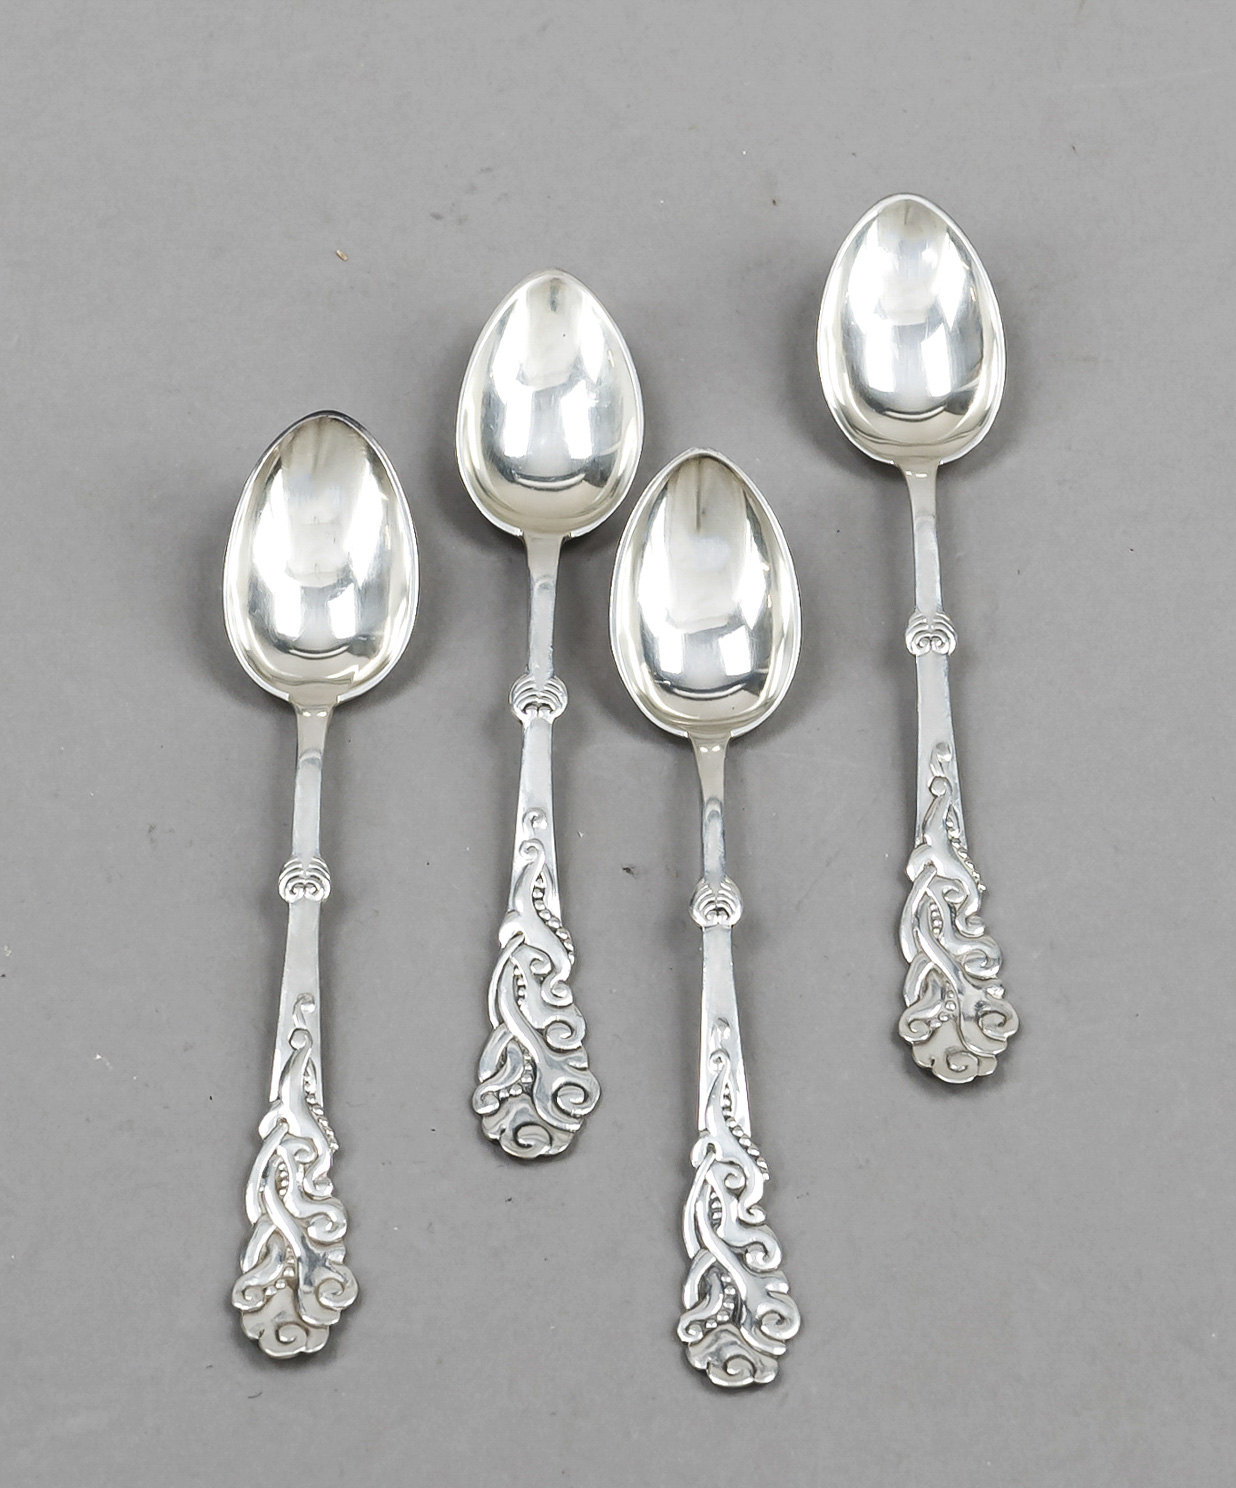 Twelve teaspoons, Denmark, 1917, hallmark Christian F. Heise, master's mark CGP, silver 830/000,